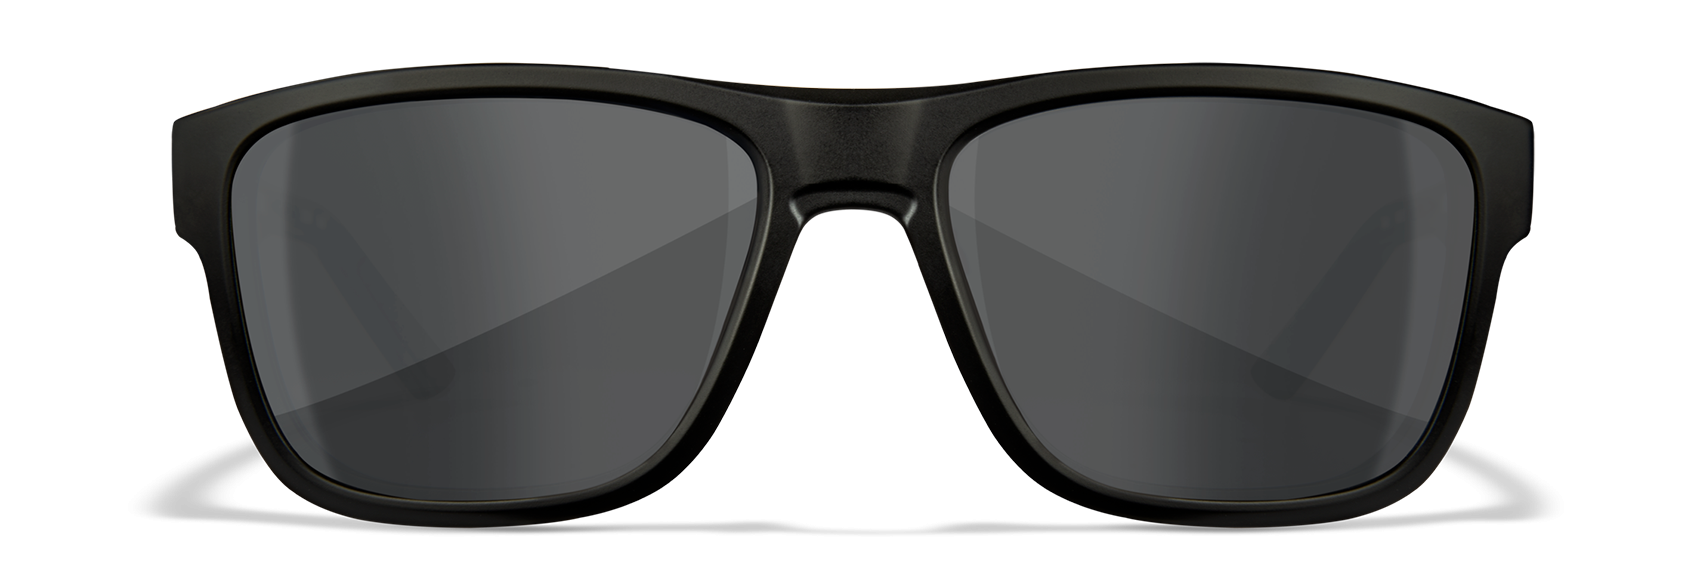 Wiley X WX Ovation Smoke Grey Lens Polycarbonate Sunglasses